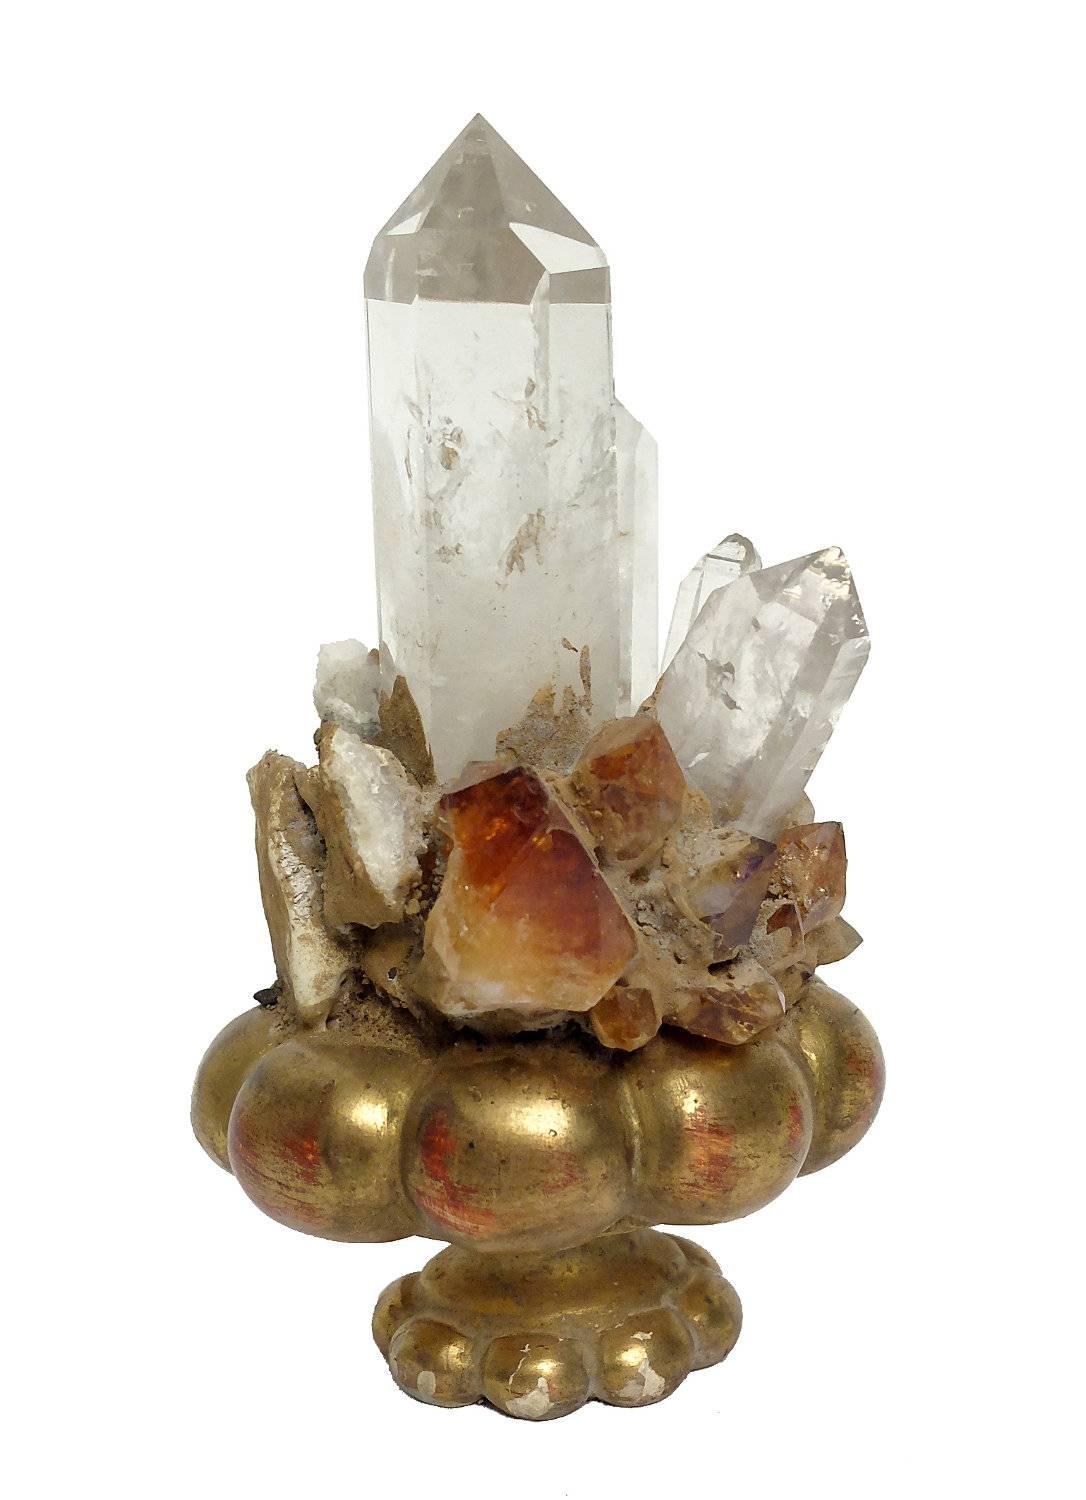 Italian Wunderkammer Naturalia Mineral Specimen of Rock Crystal and Citrine Druzes